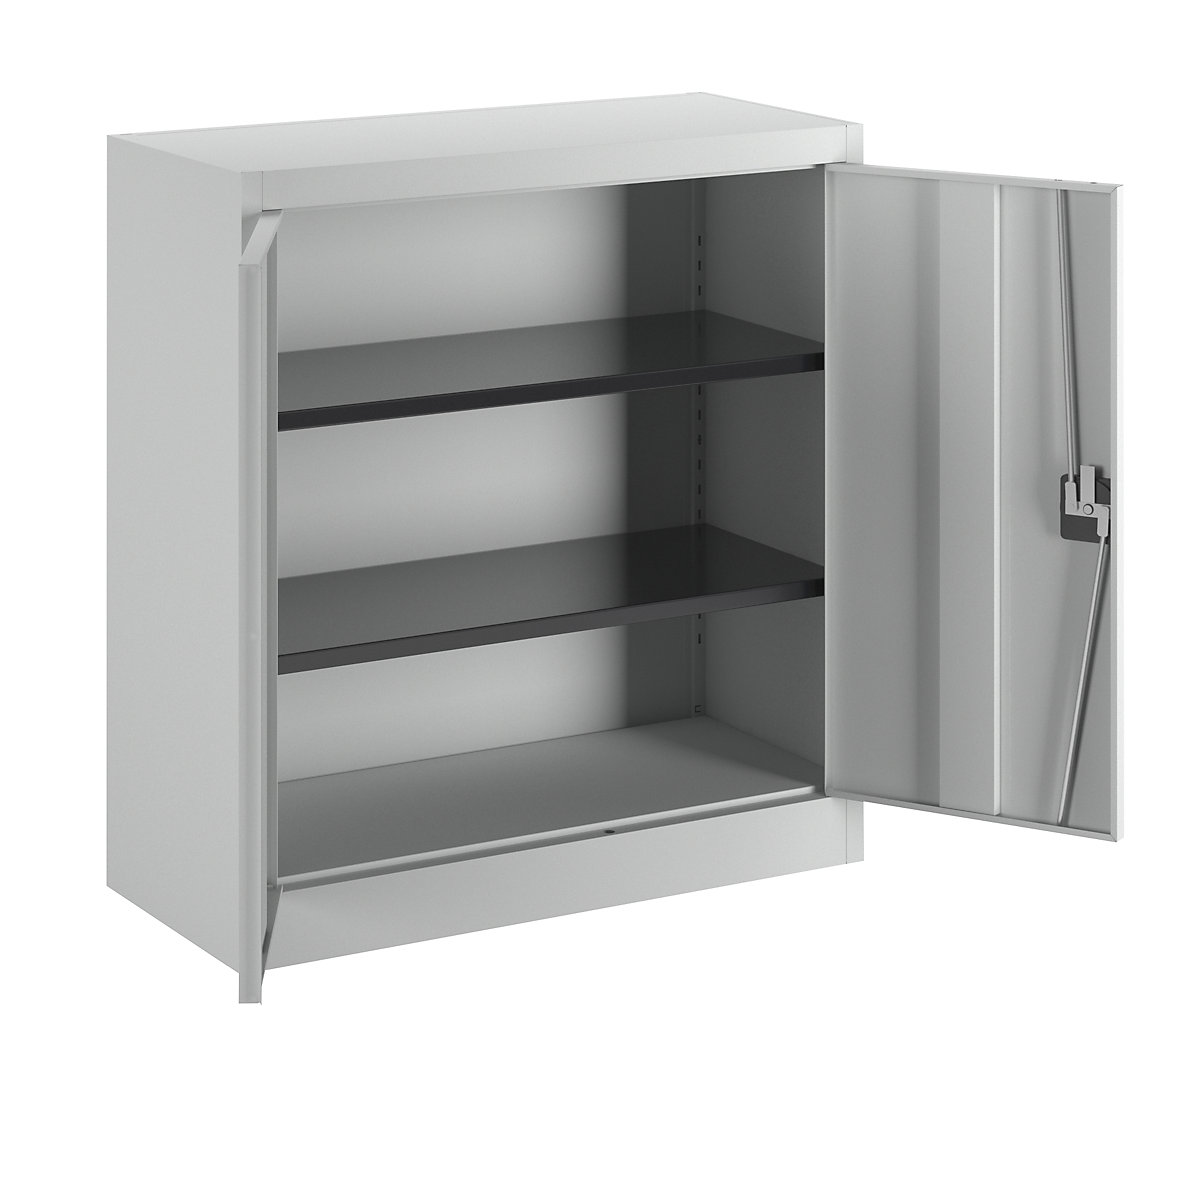 Steel cupboard with hinged doors - mauser